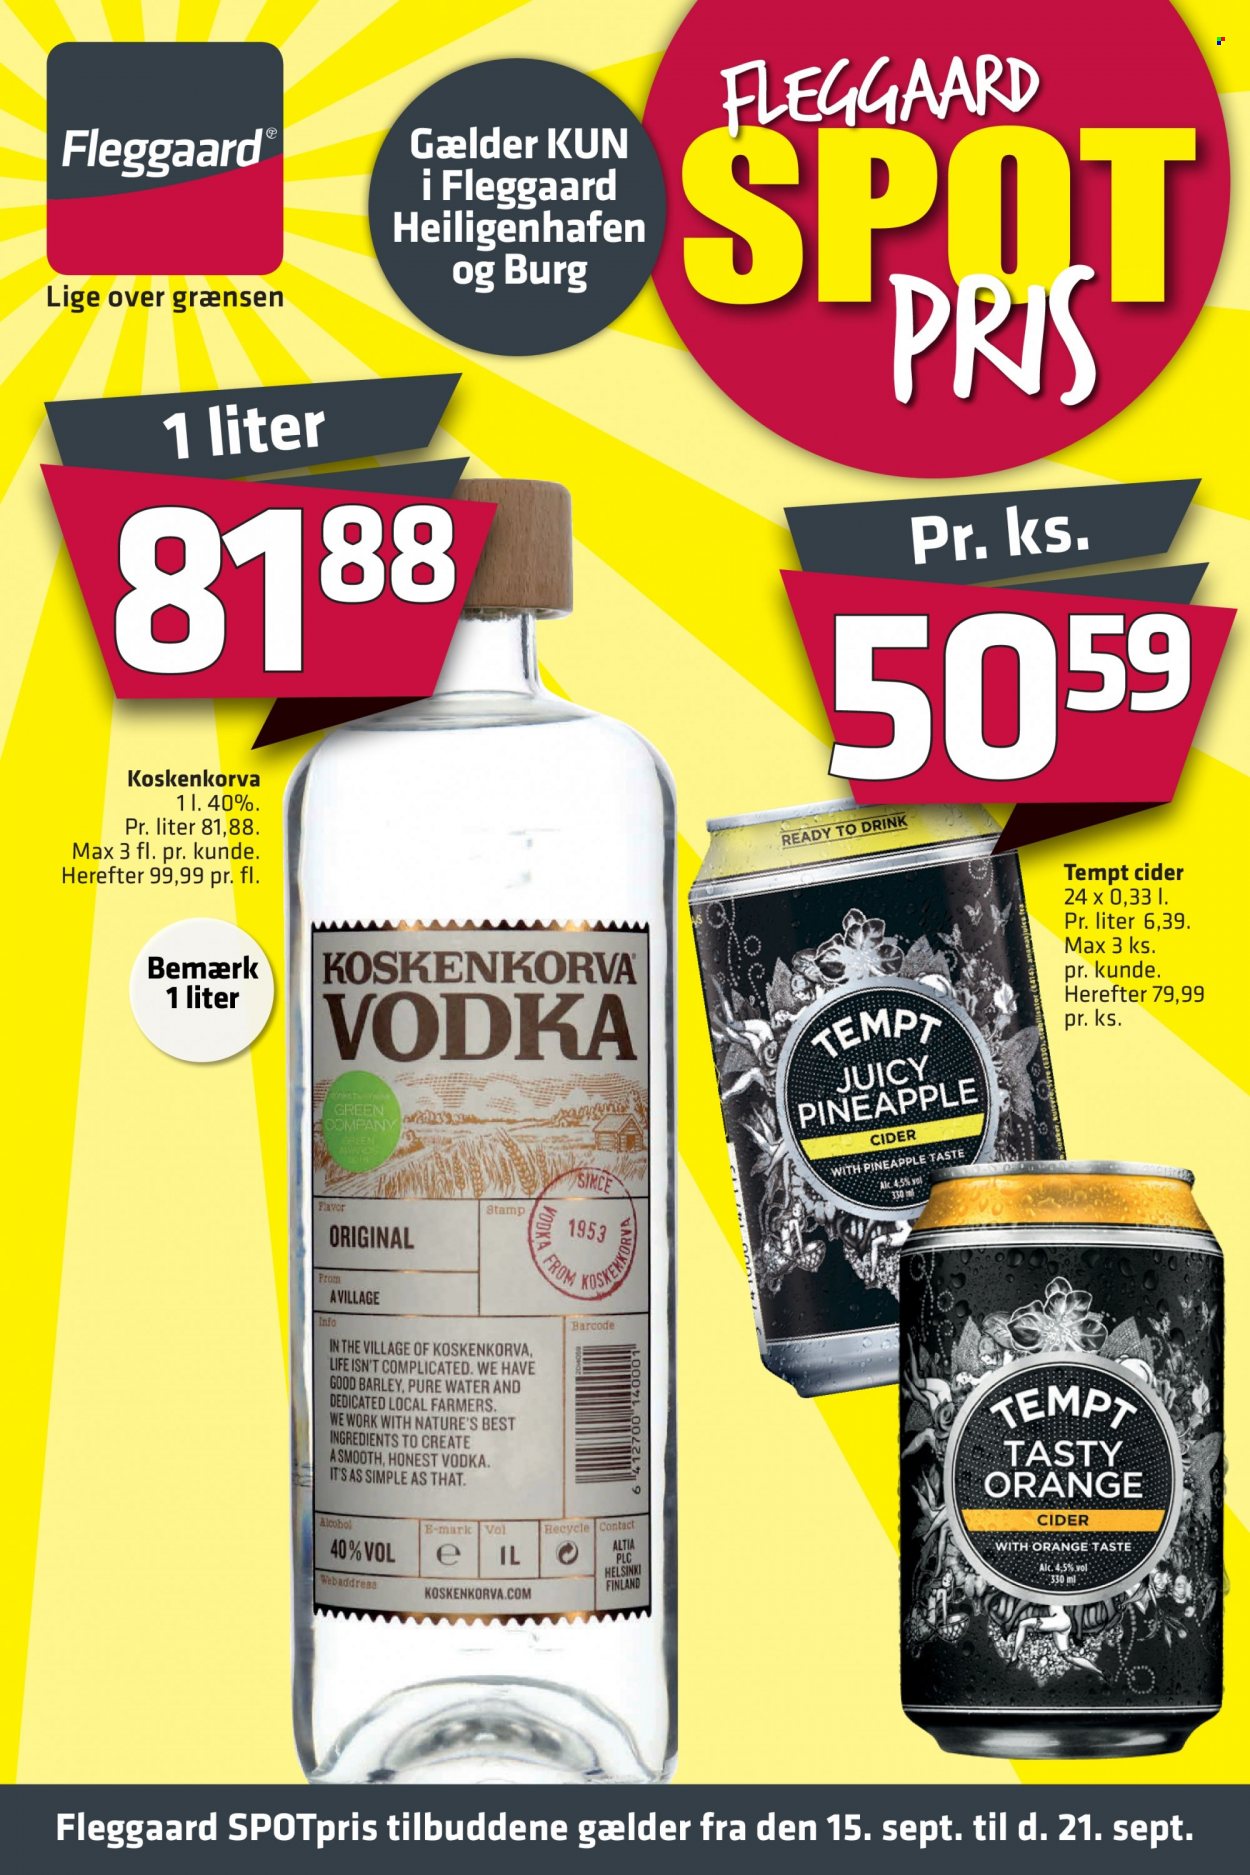 thumbnail - Fleggaard tilbud  - 15.9.2021 - 21.9.2021 - tilbudsprodukter - cider, vodka. Side 1.